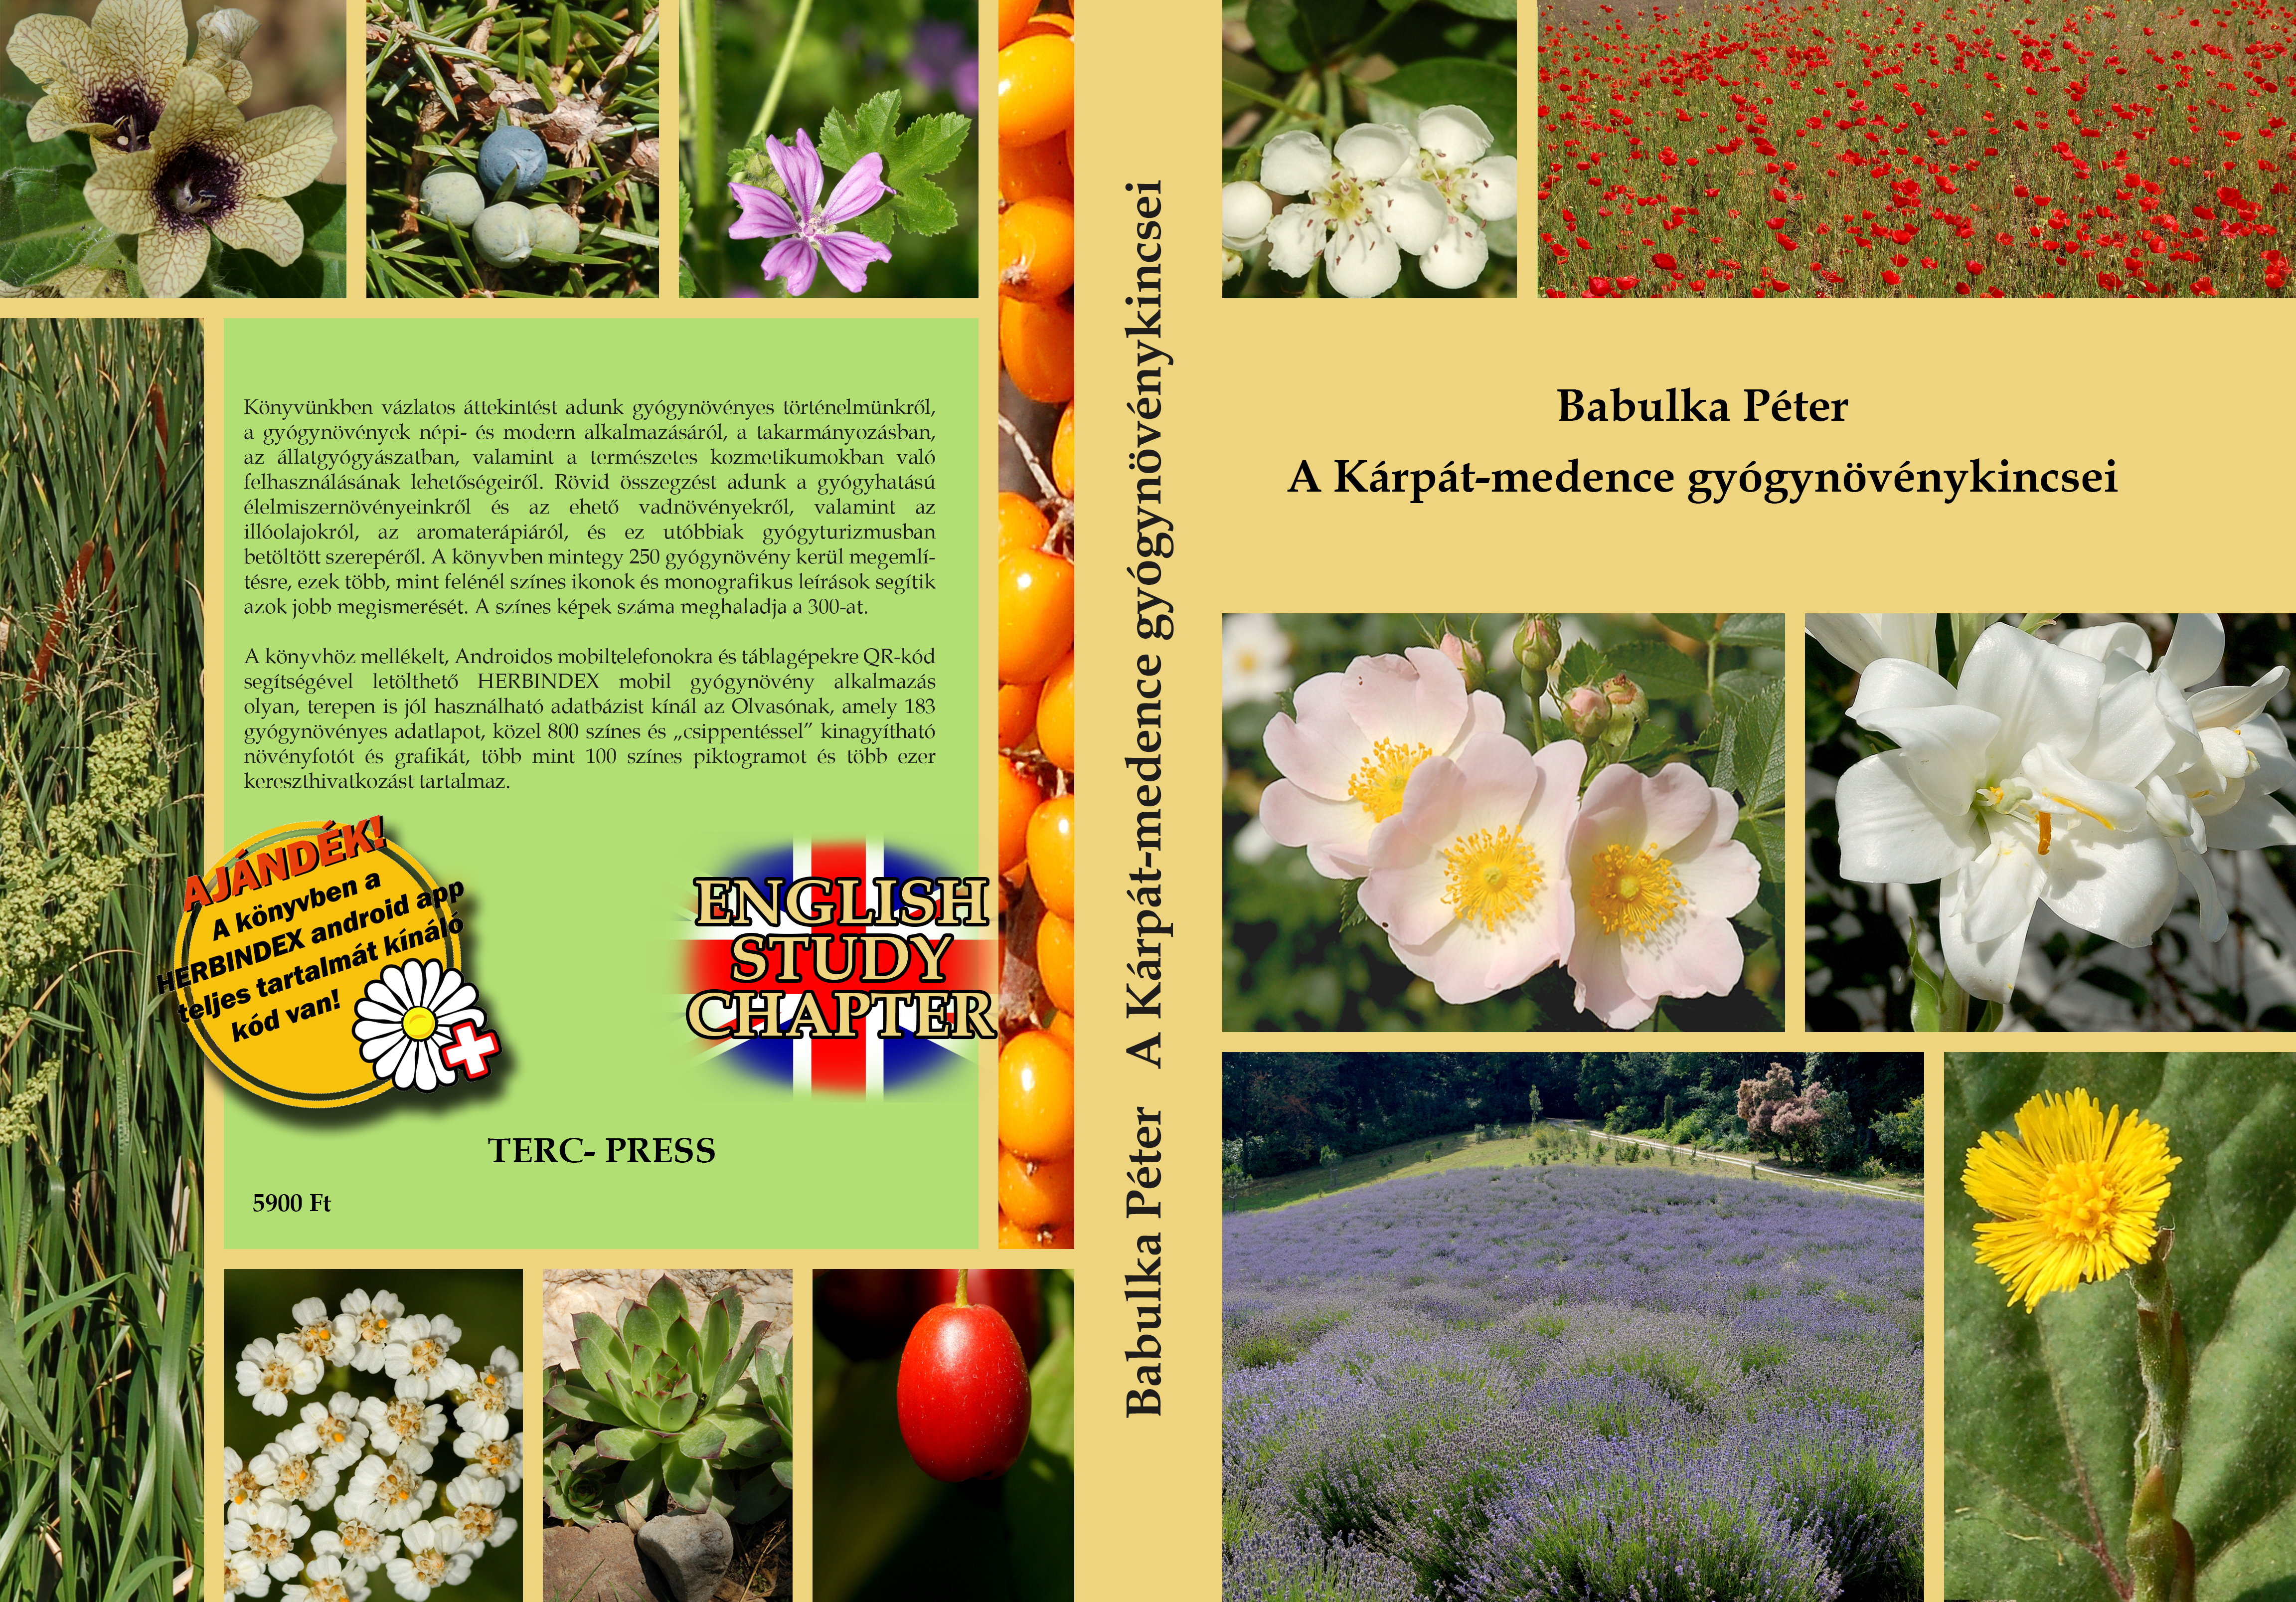 babulka konyvborito PRINT elokeszites 360×242and15-15-15-15mm textes